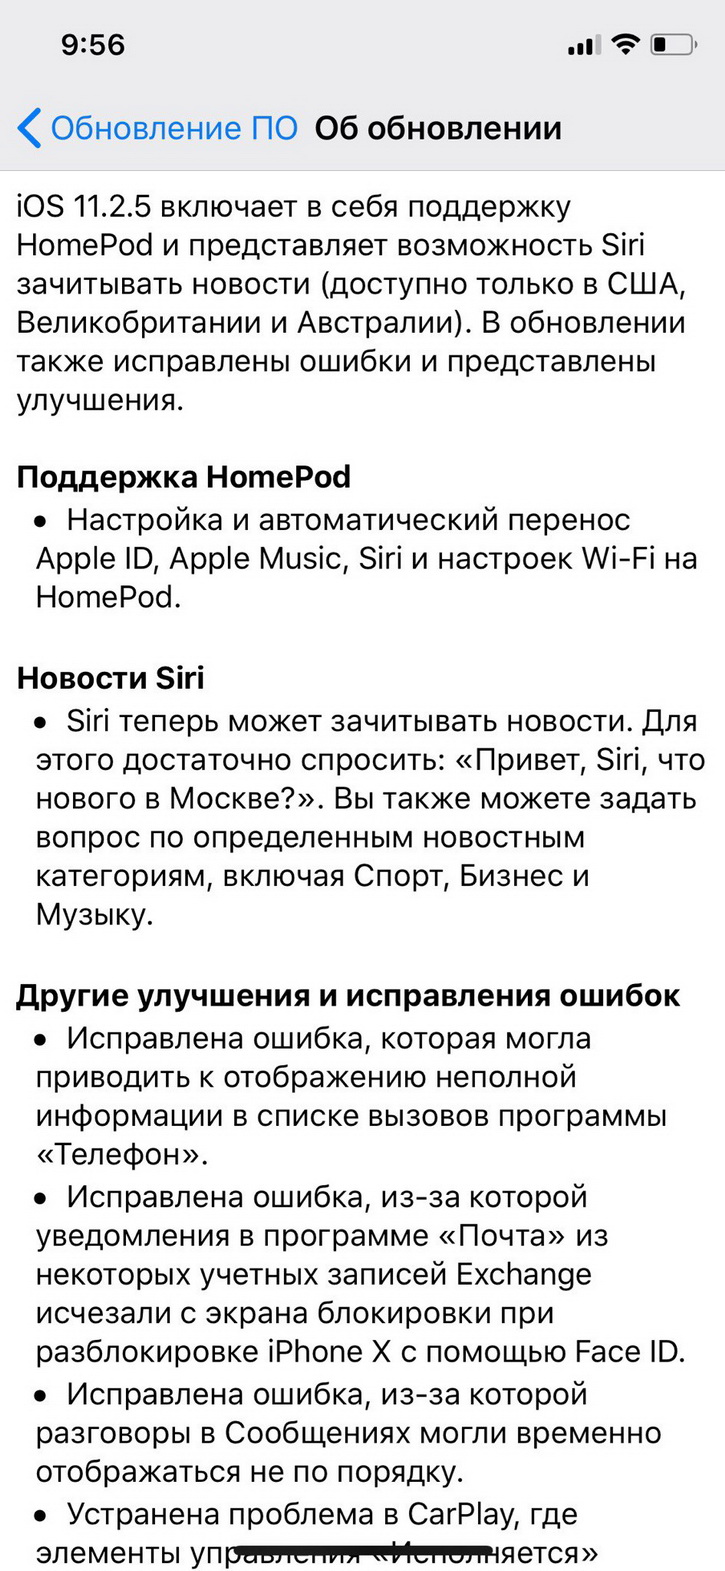 iOS 11.2.5   HomePod  iPhone ( )